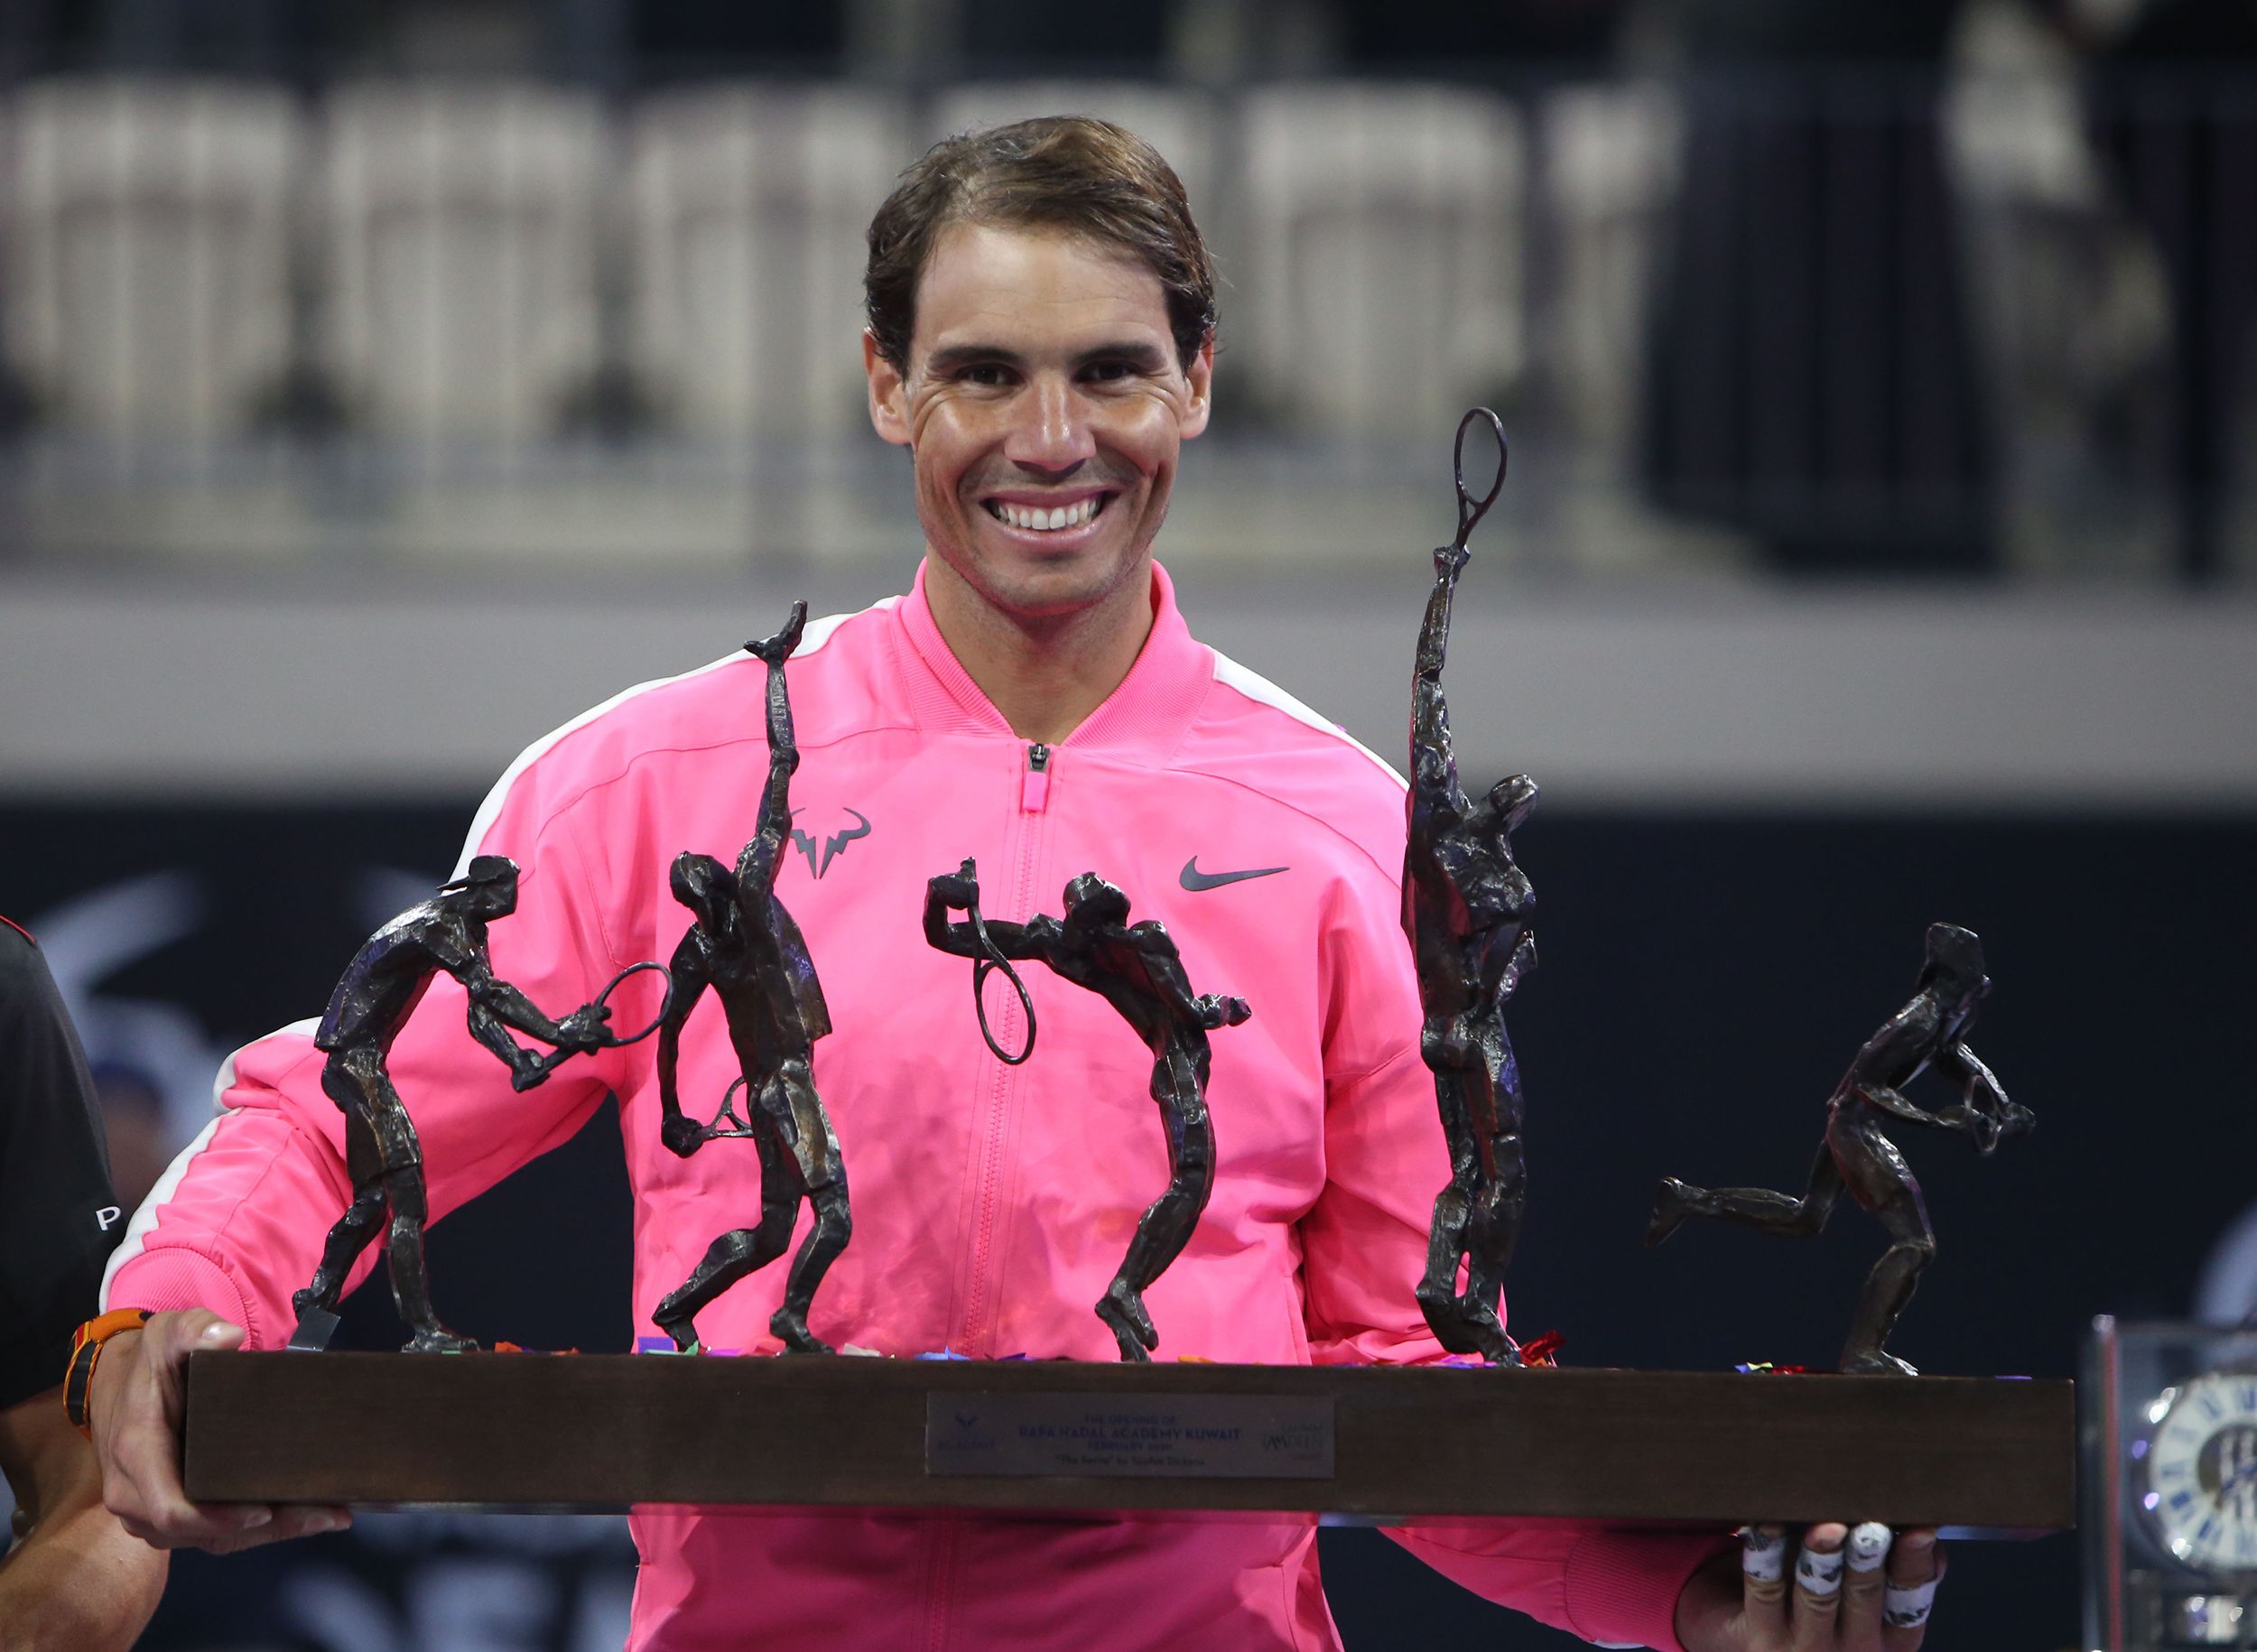 Rafael Nadal's Roland Garros Statue: Embarrassing and Disrespectful